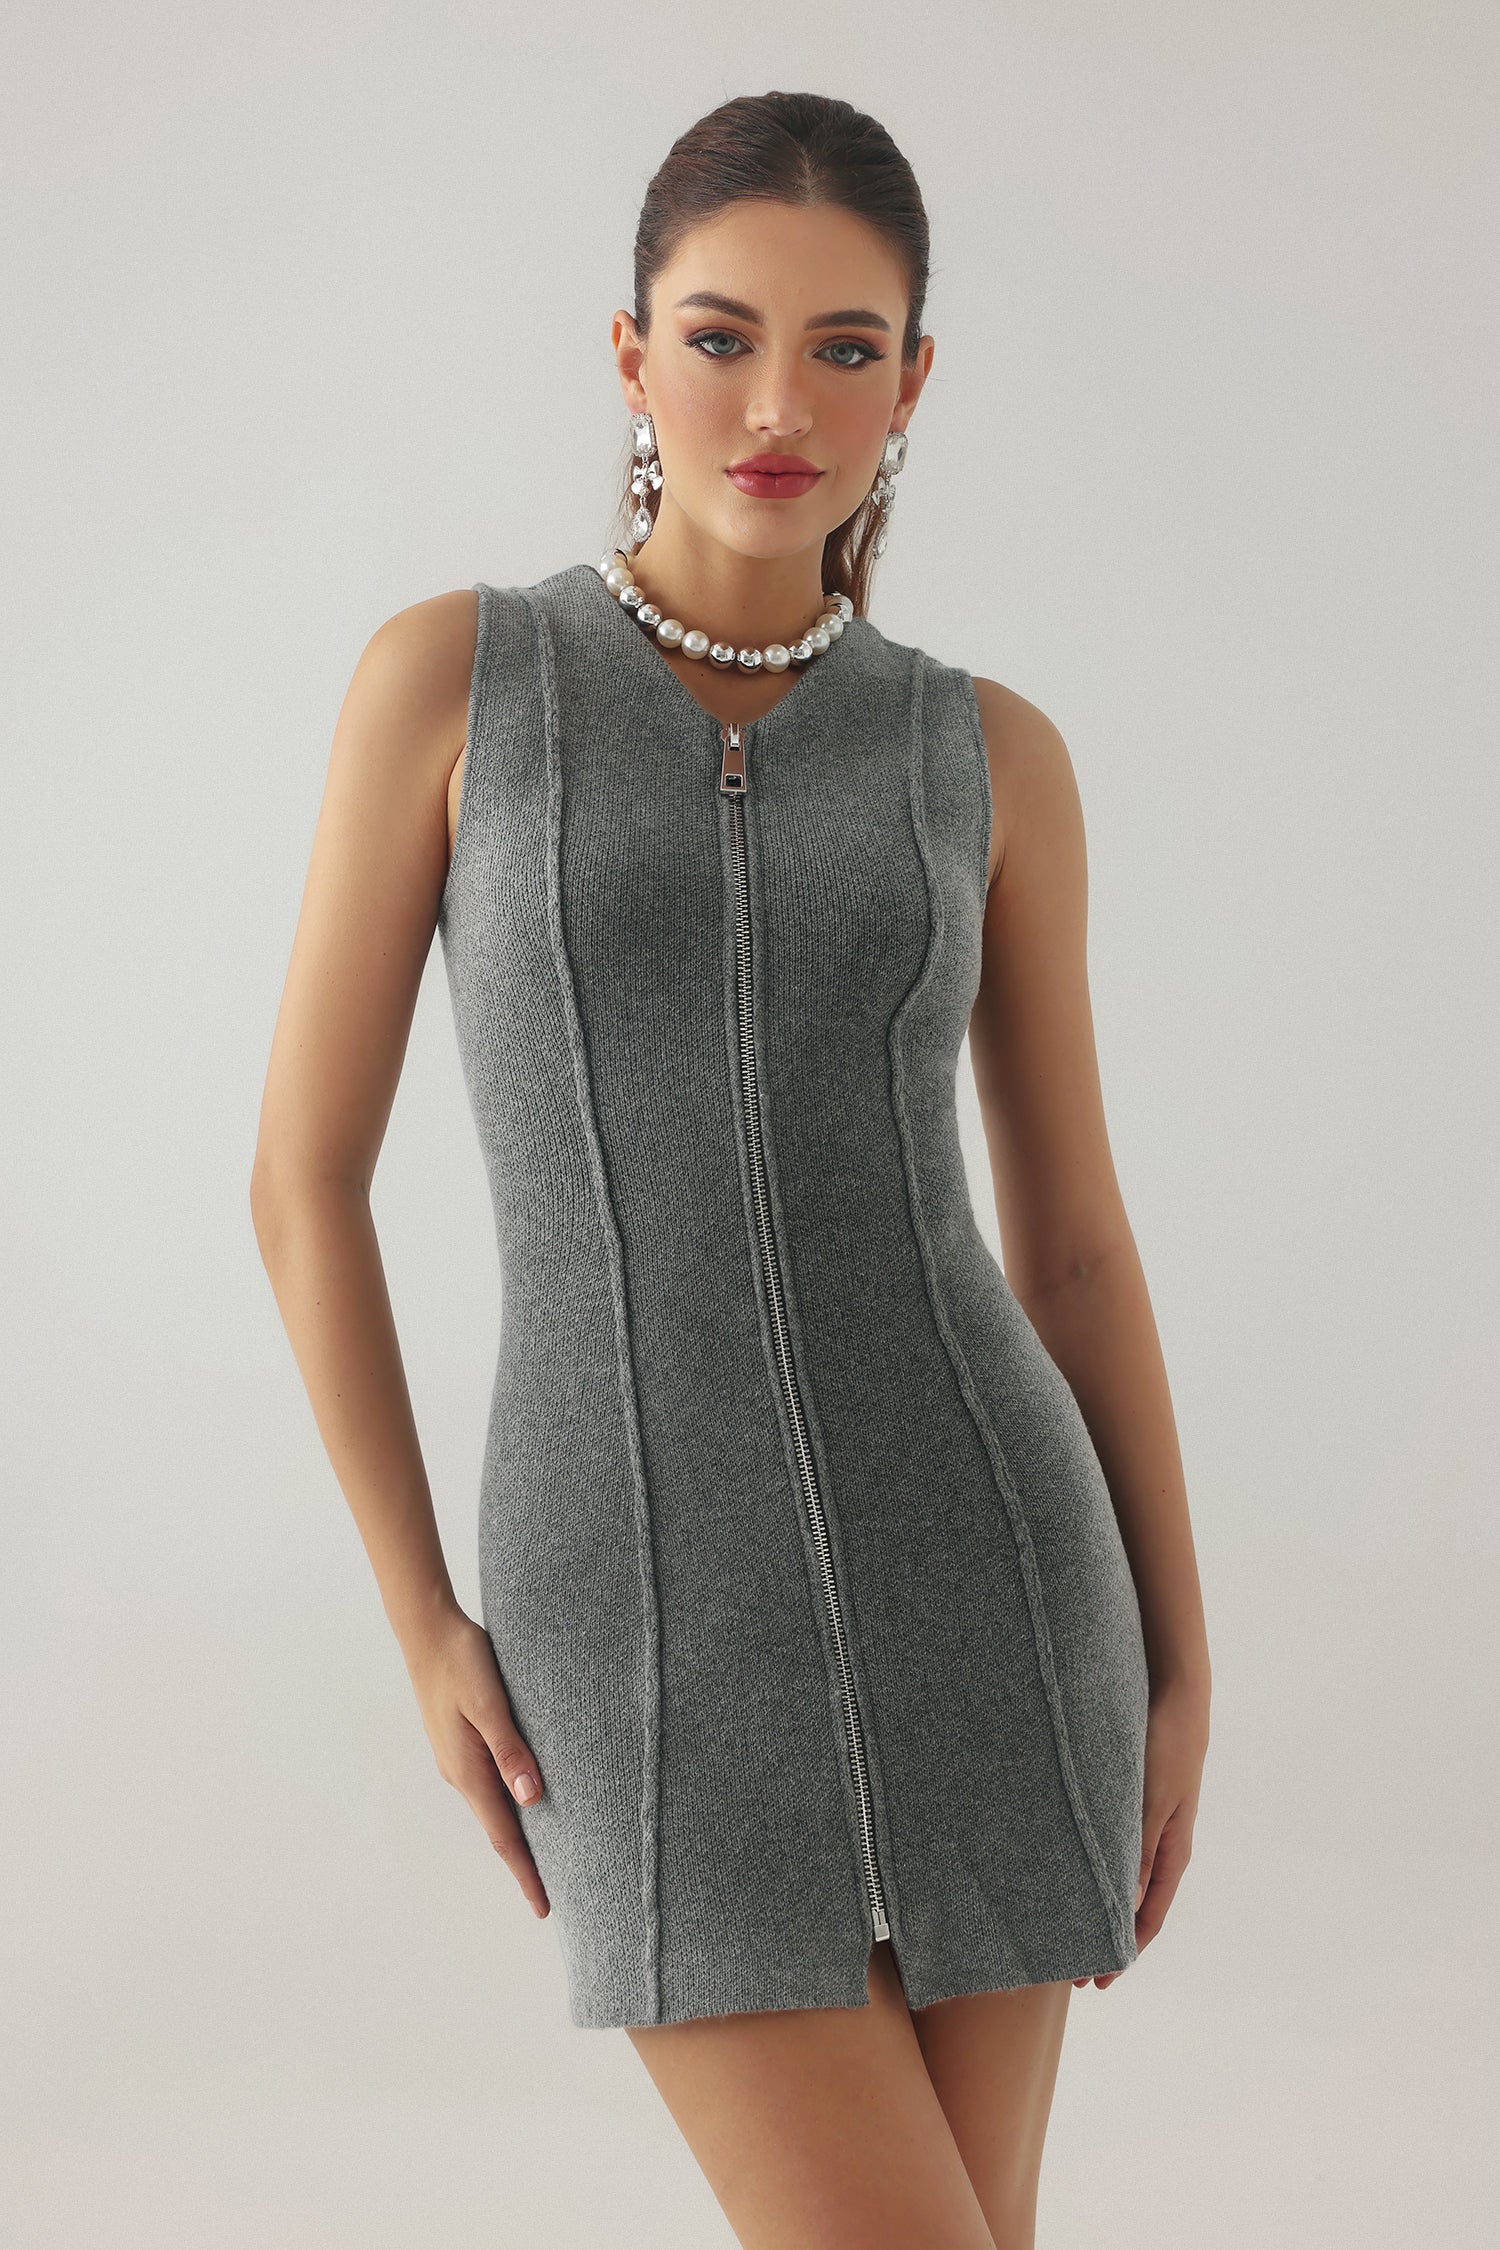 Klaria Sleeveless Knit Mini Dress